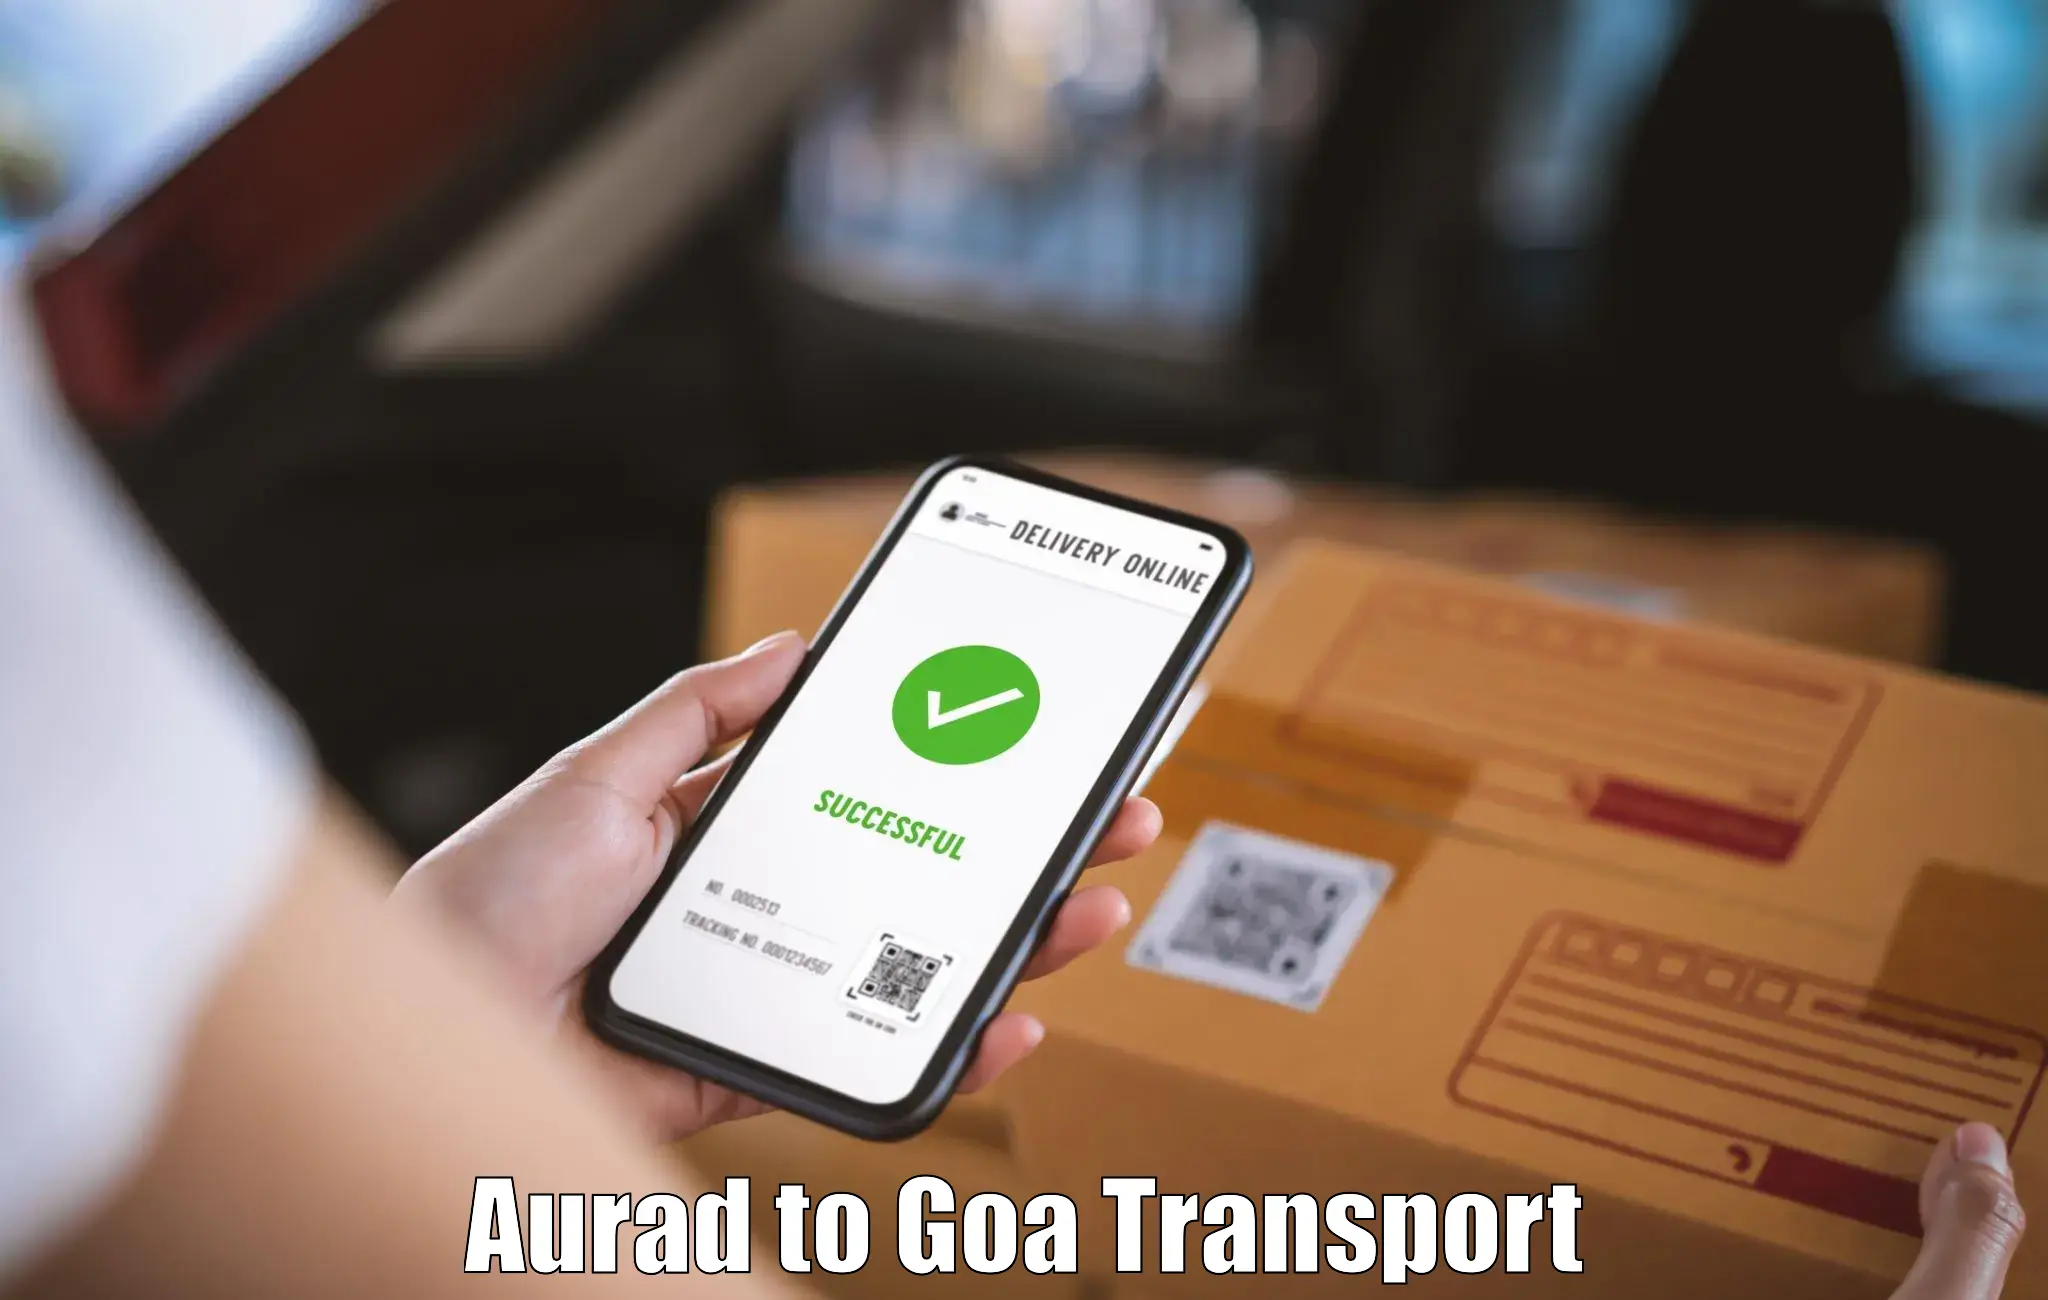 Shipping services Aurad to Goa University